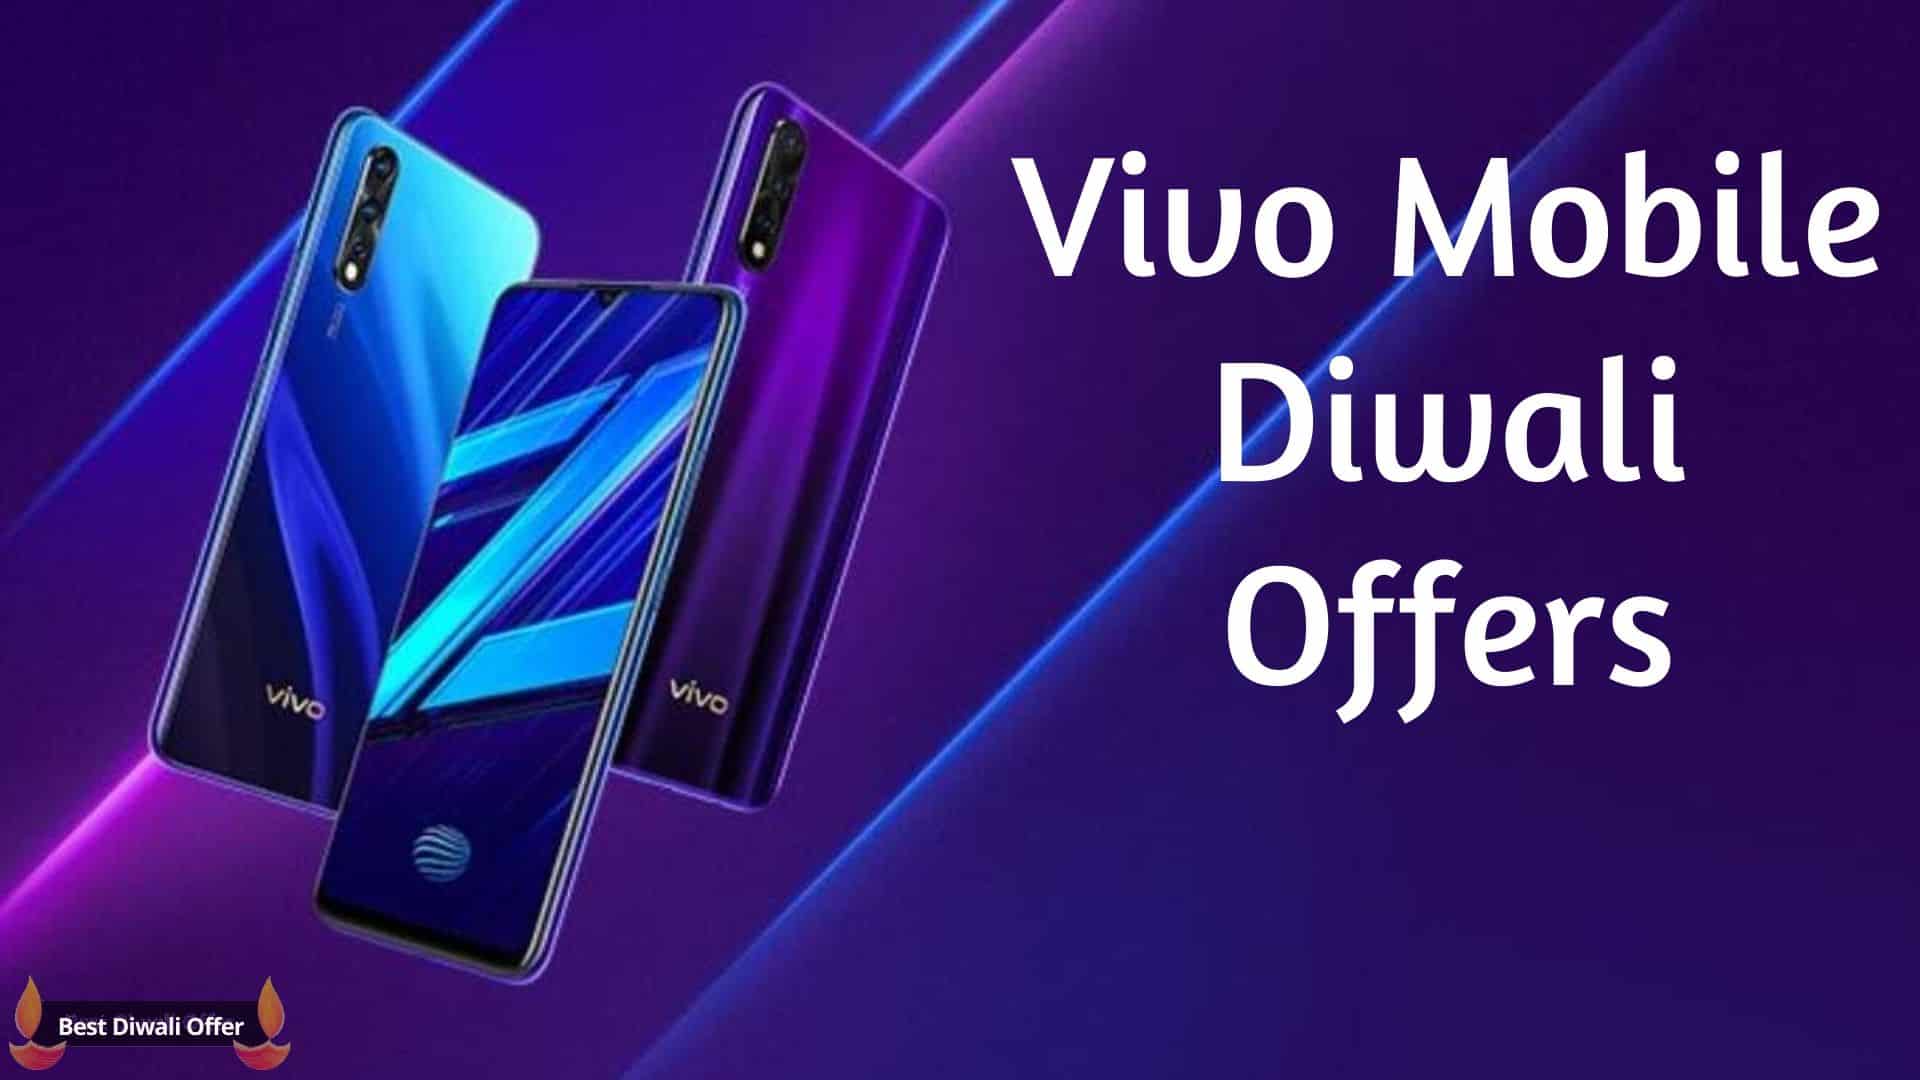 Vivo Mobile Diwali Offers